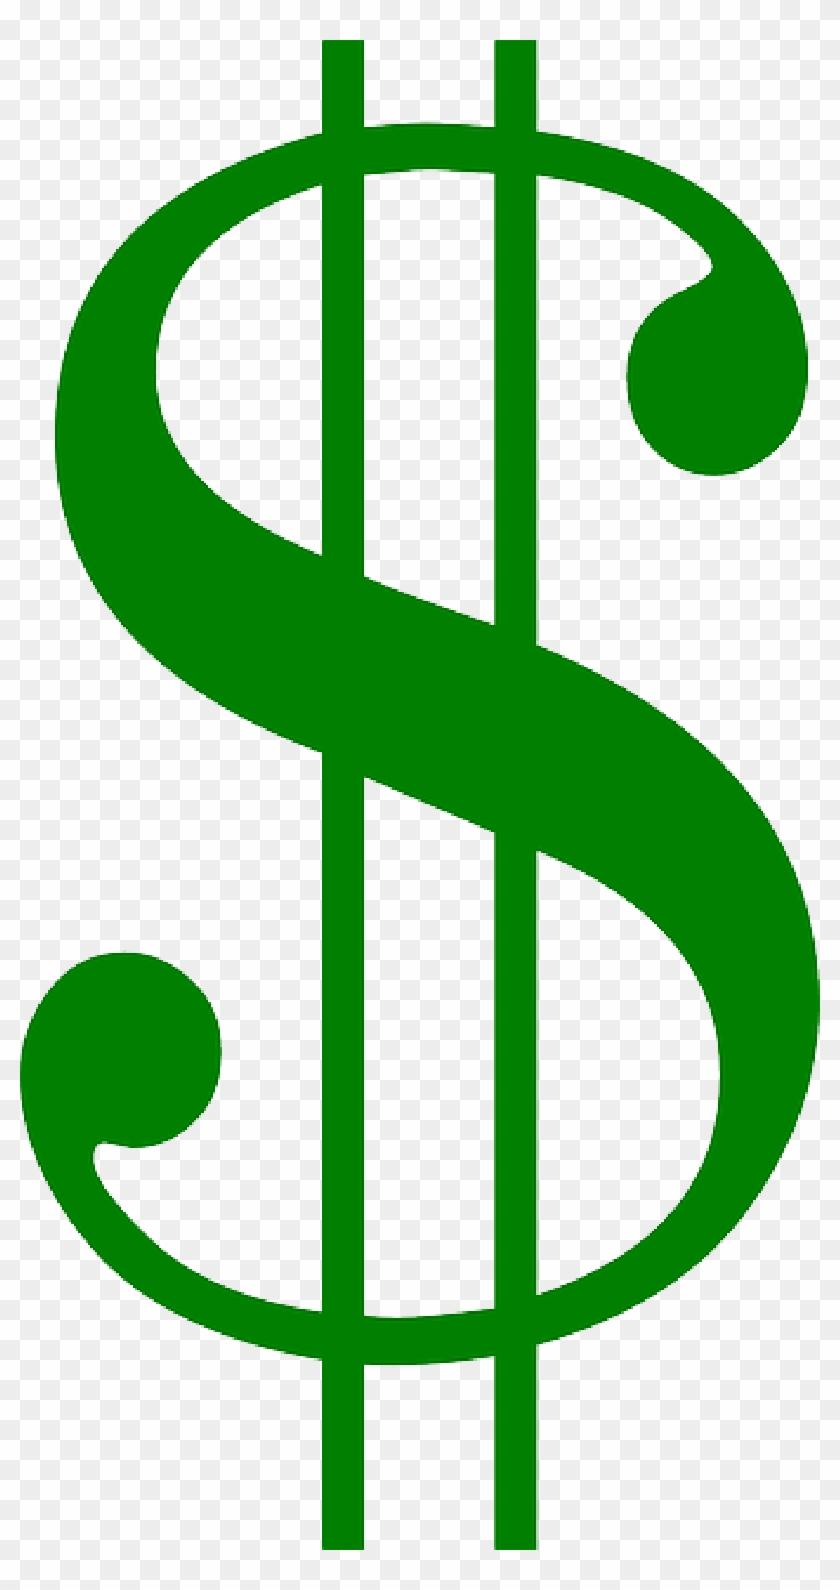 green-symbol-signs-money-free-dollar-dollar-sign-clip-art-free